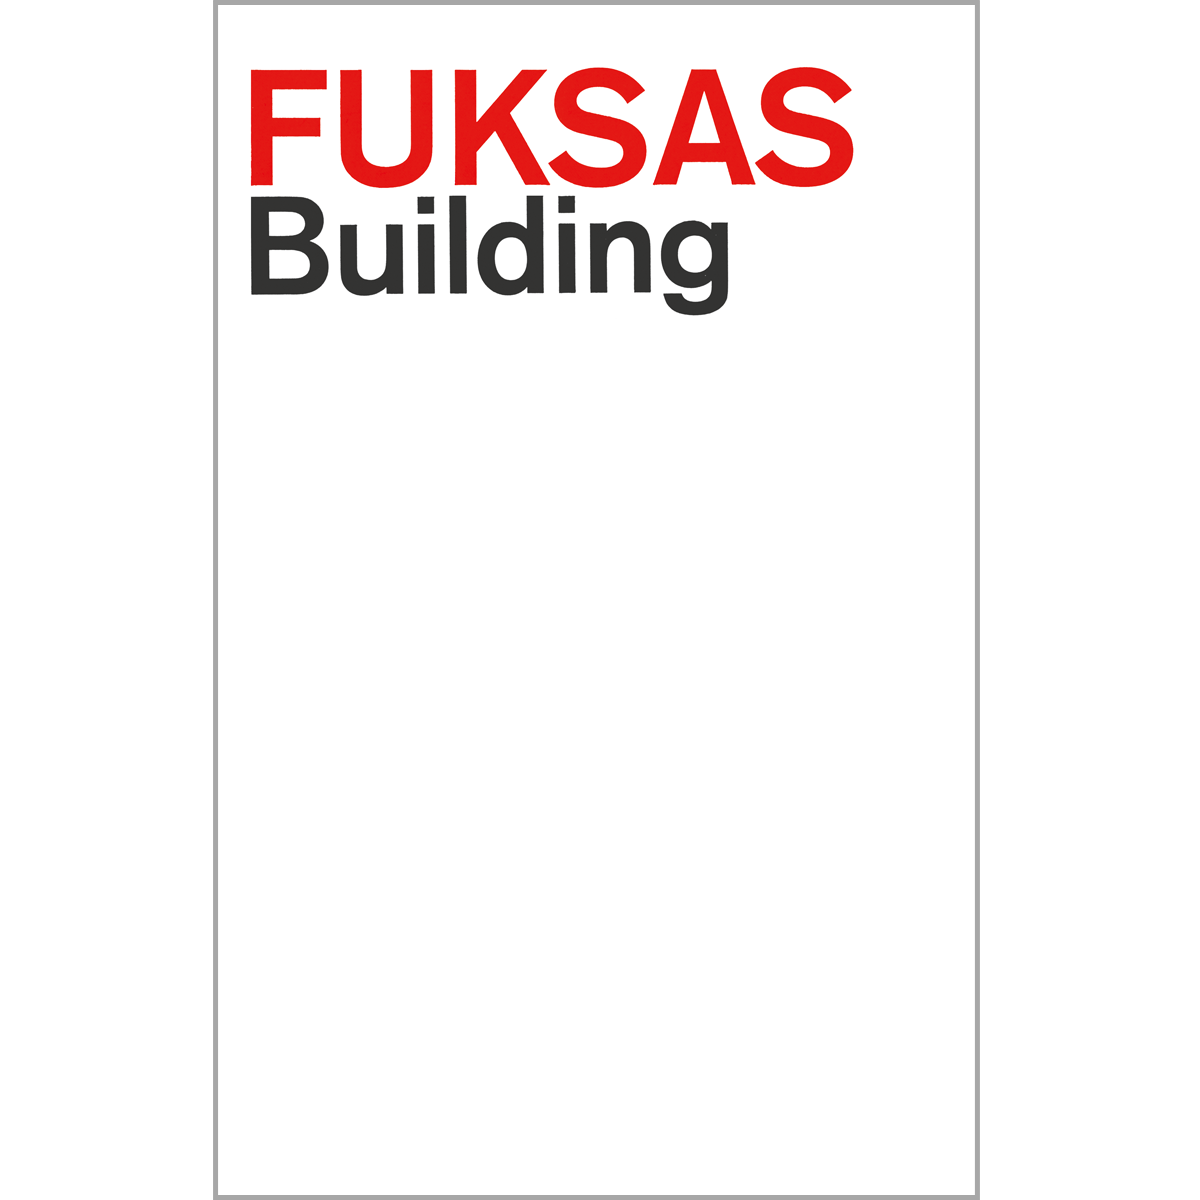 Fuksas Building